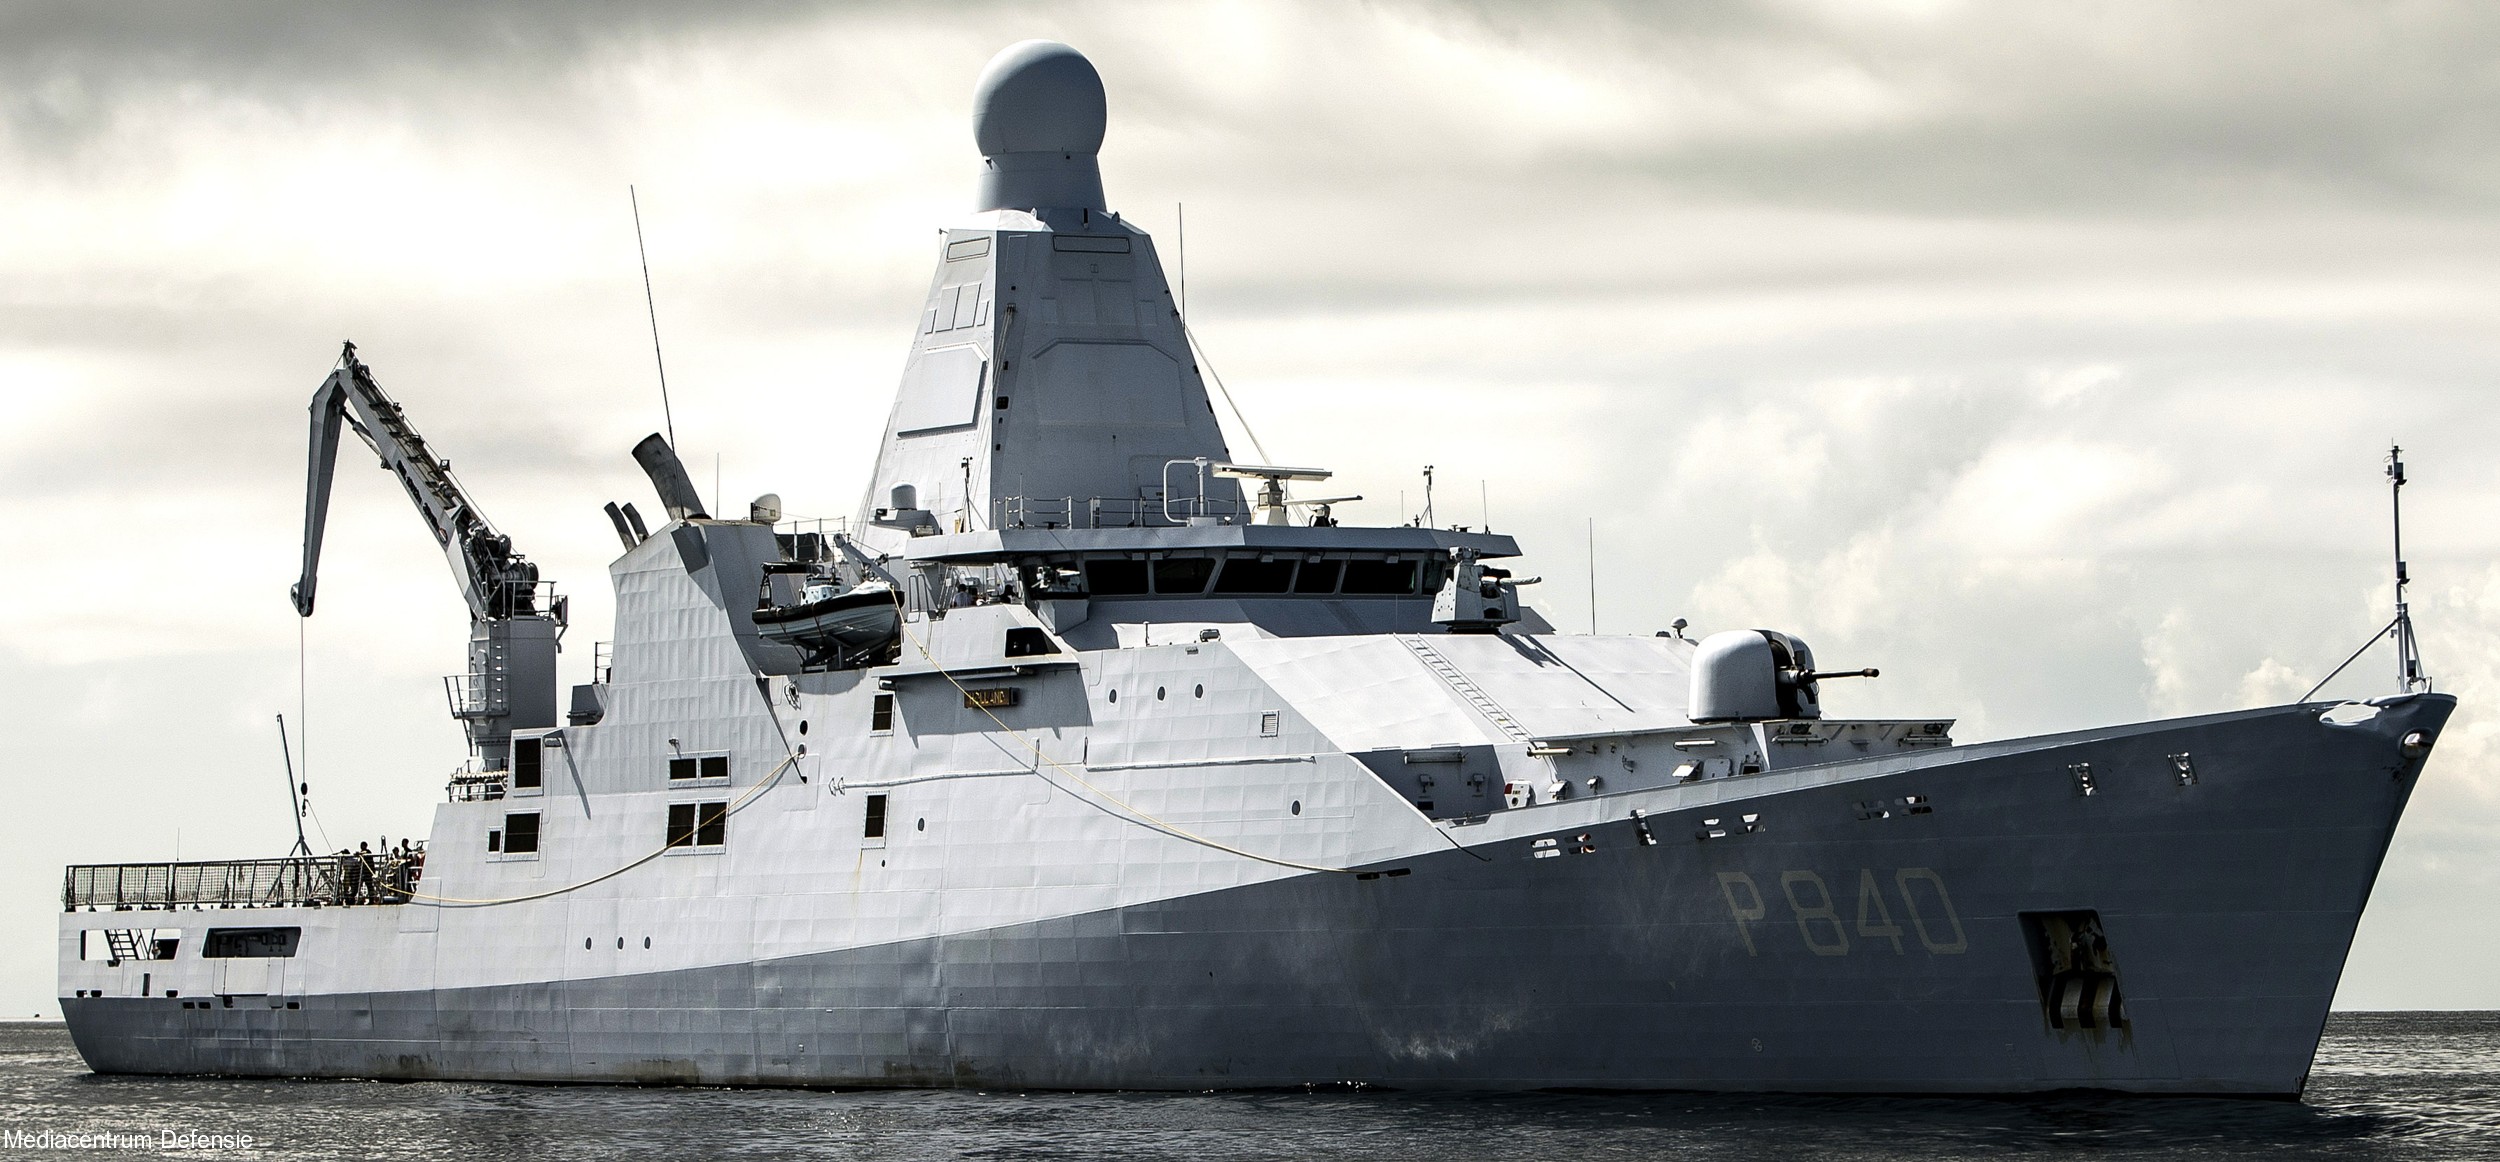 p-840 hnlms holland offshore patrol vessel opv royal netherlands navy 06